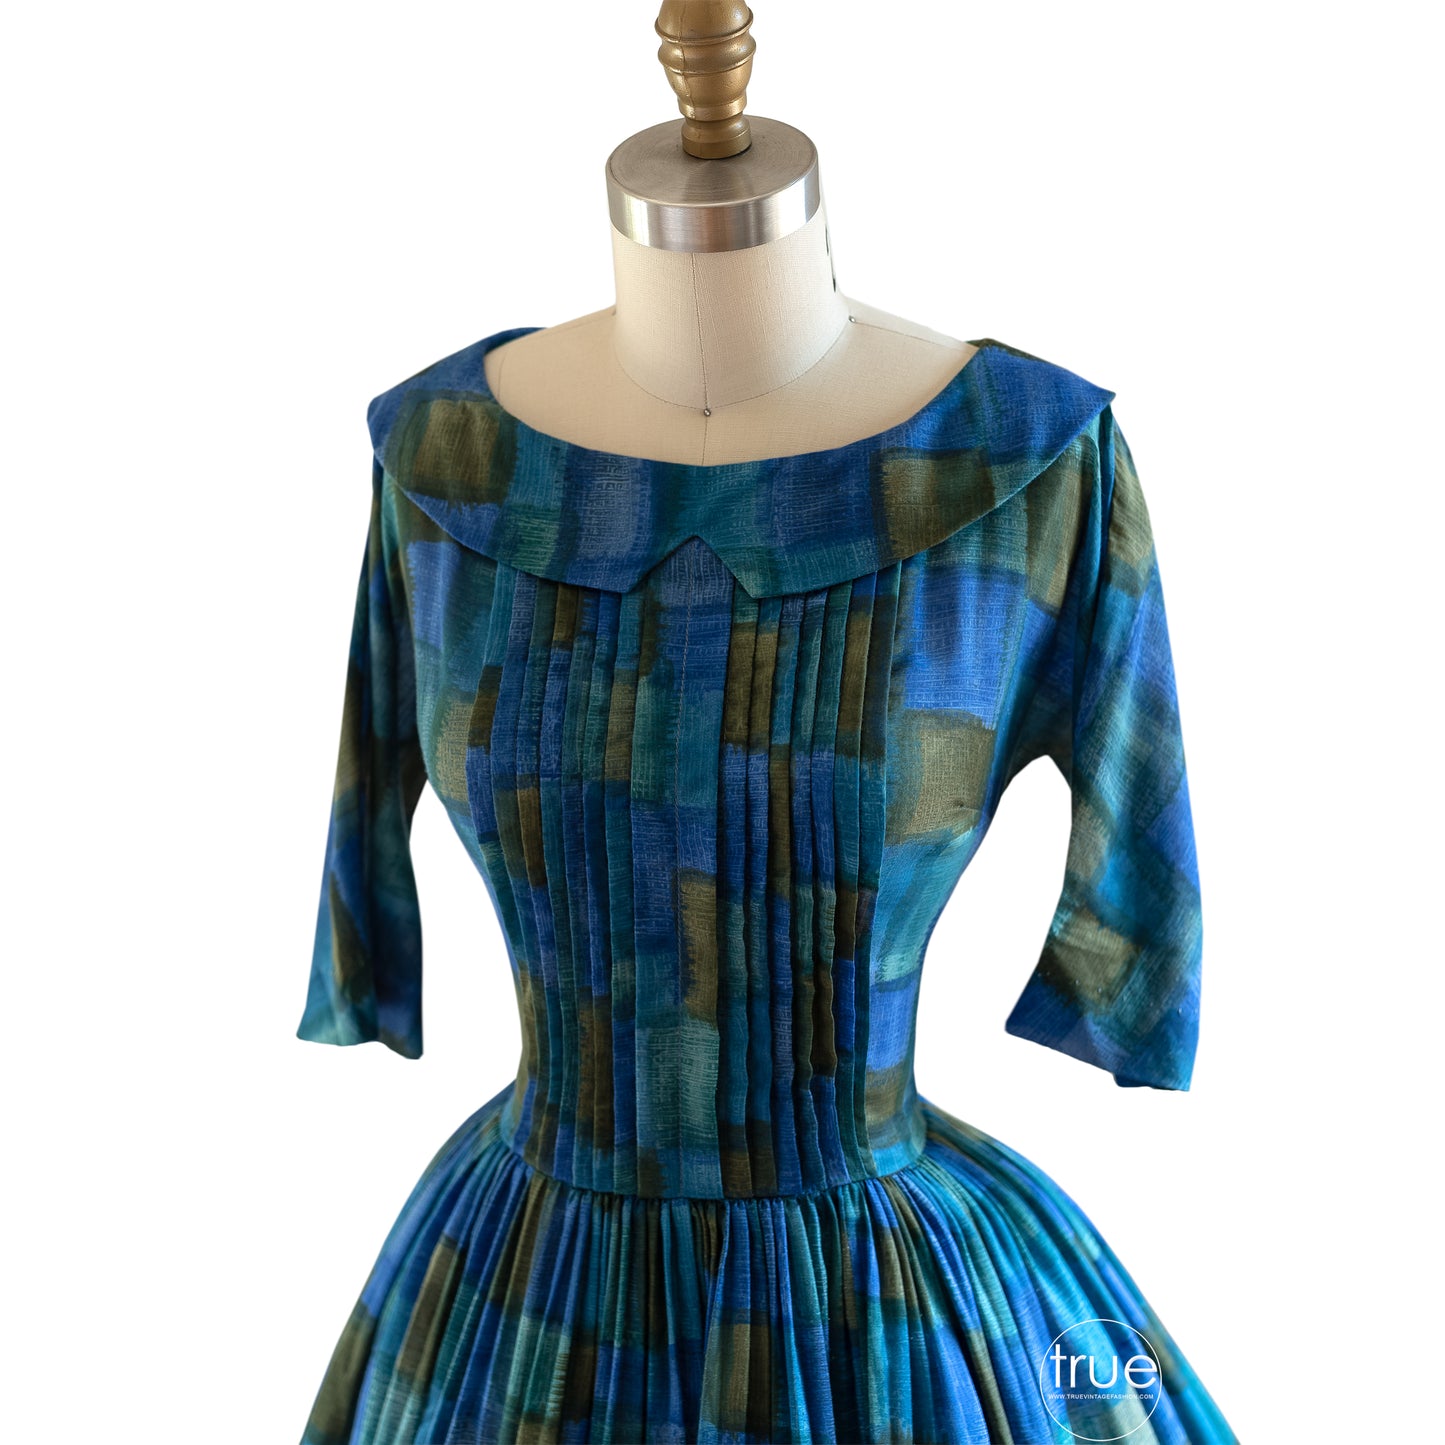 vintage 1950's dress ...R&K Originals blue rothko-esque dress